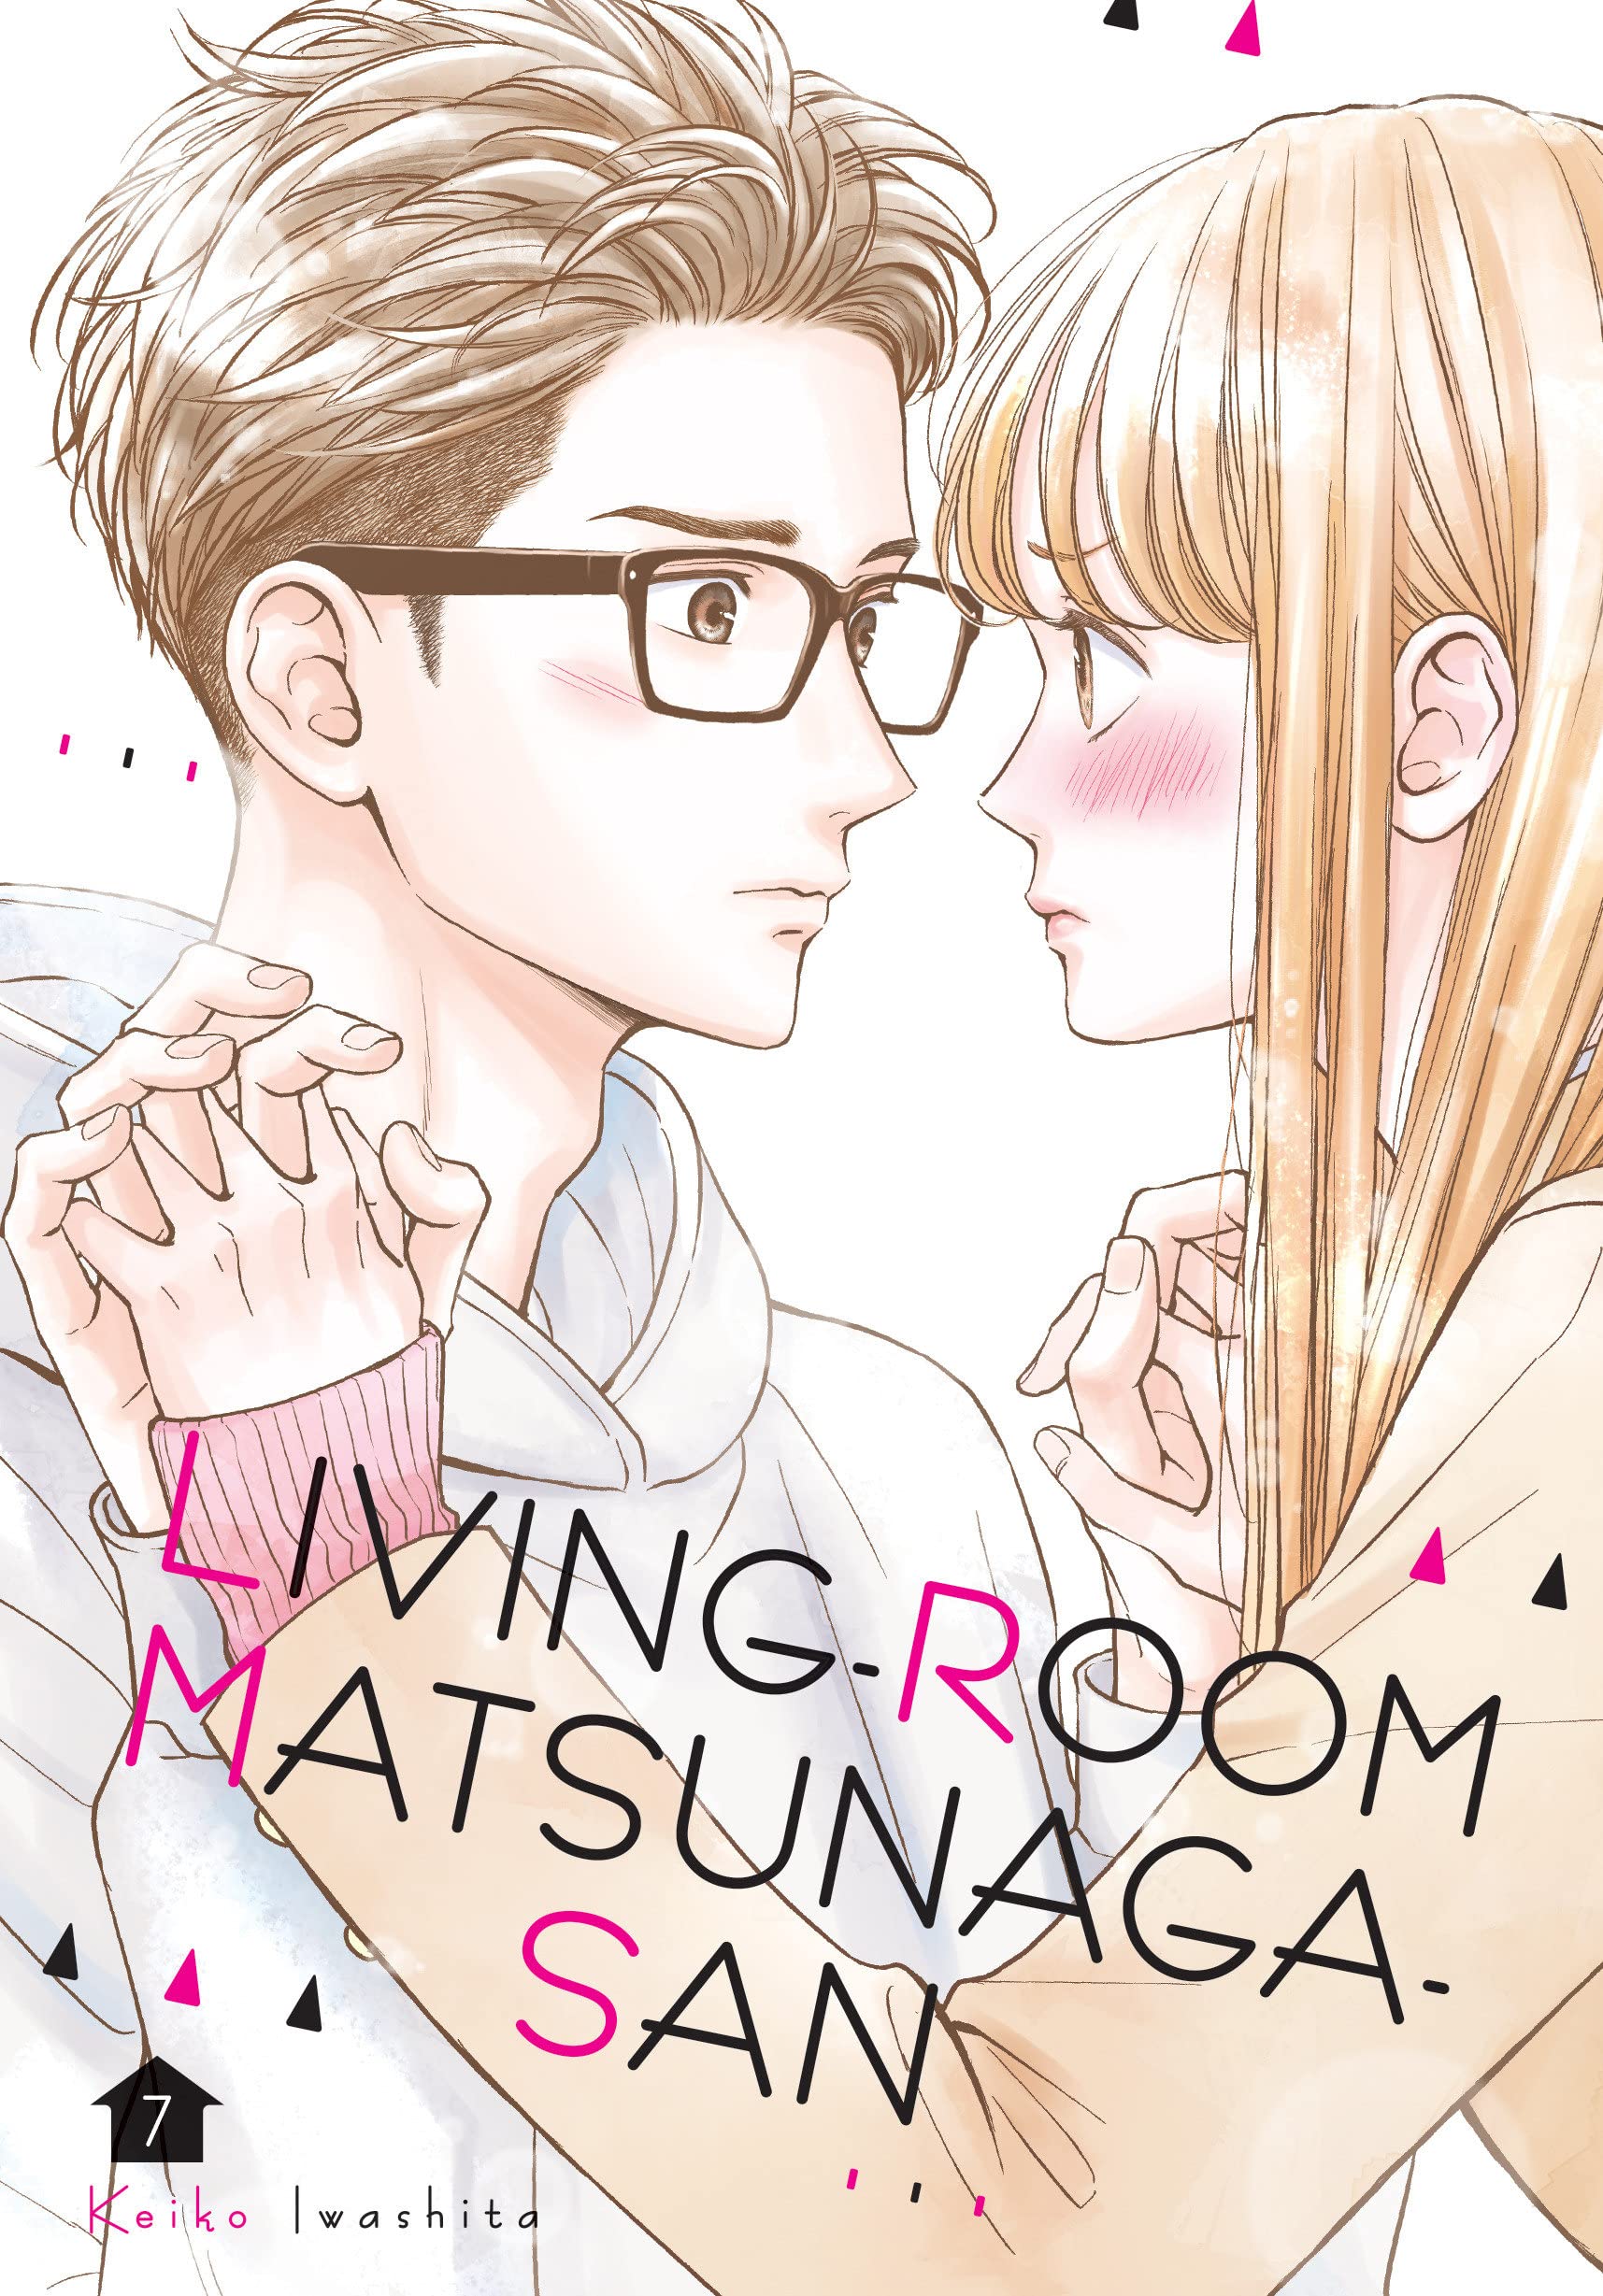 Living-Room Matsunaga-San Complete Manga Set